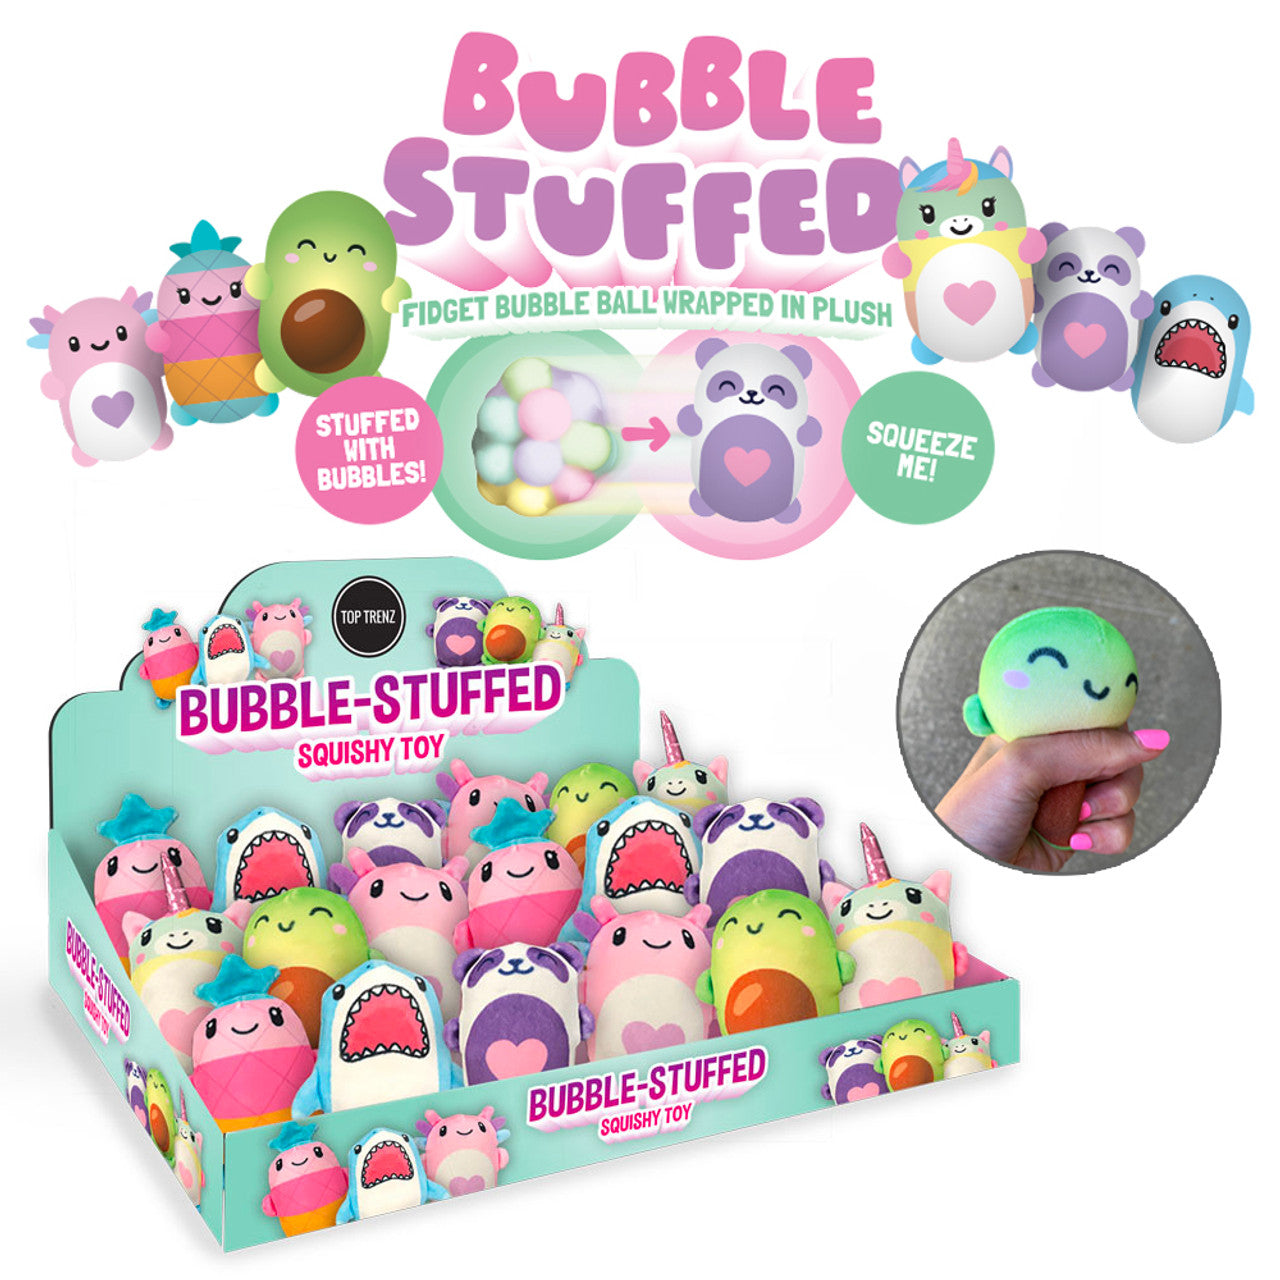 DNA Bubble-Stuffed Squishy Friends Fidget Toy 1/u